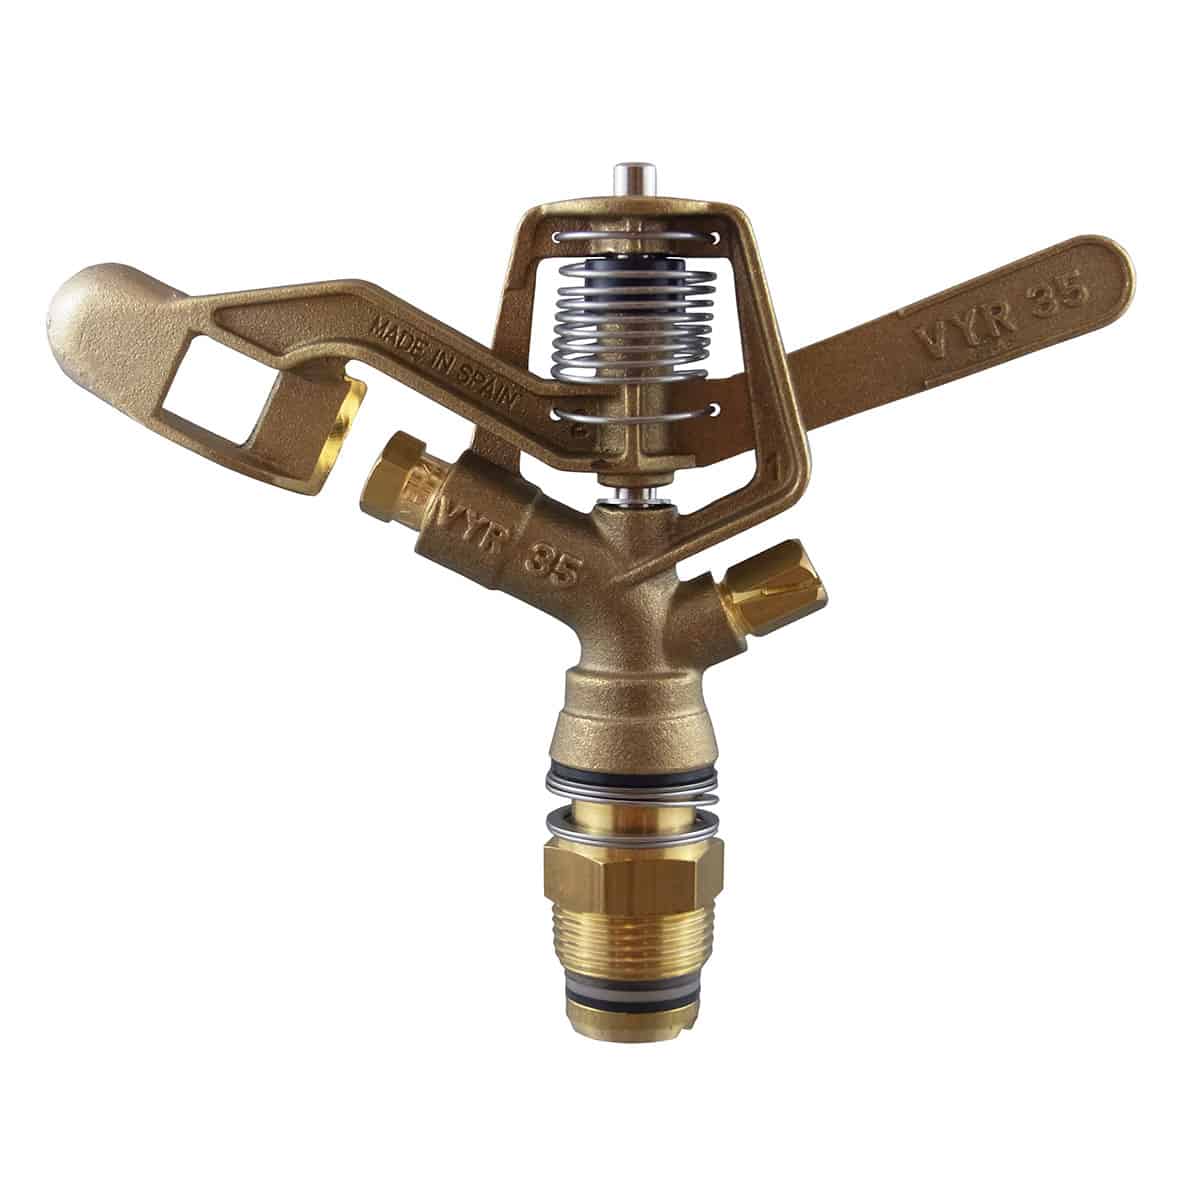 Vyrsa Impact Sprinkler VYR-35 20mm W/4.4mm 2.4R Nozzle